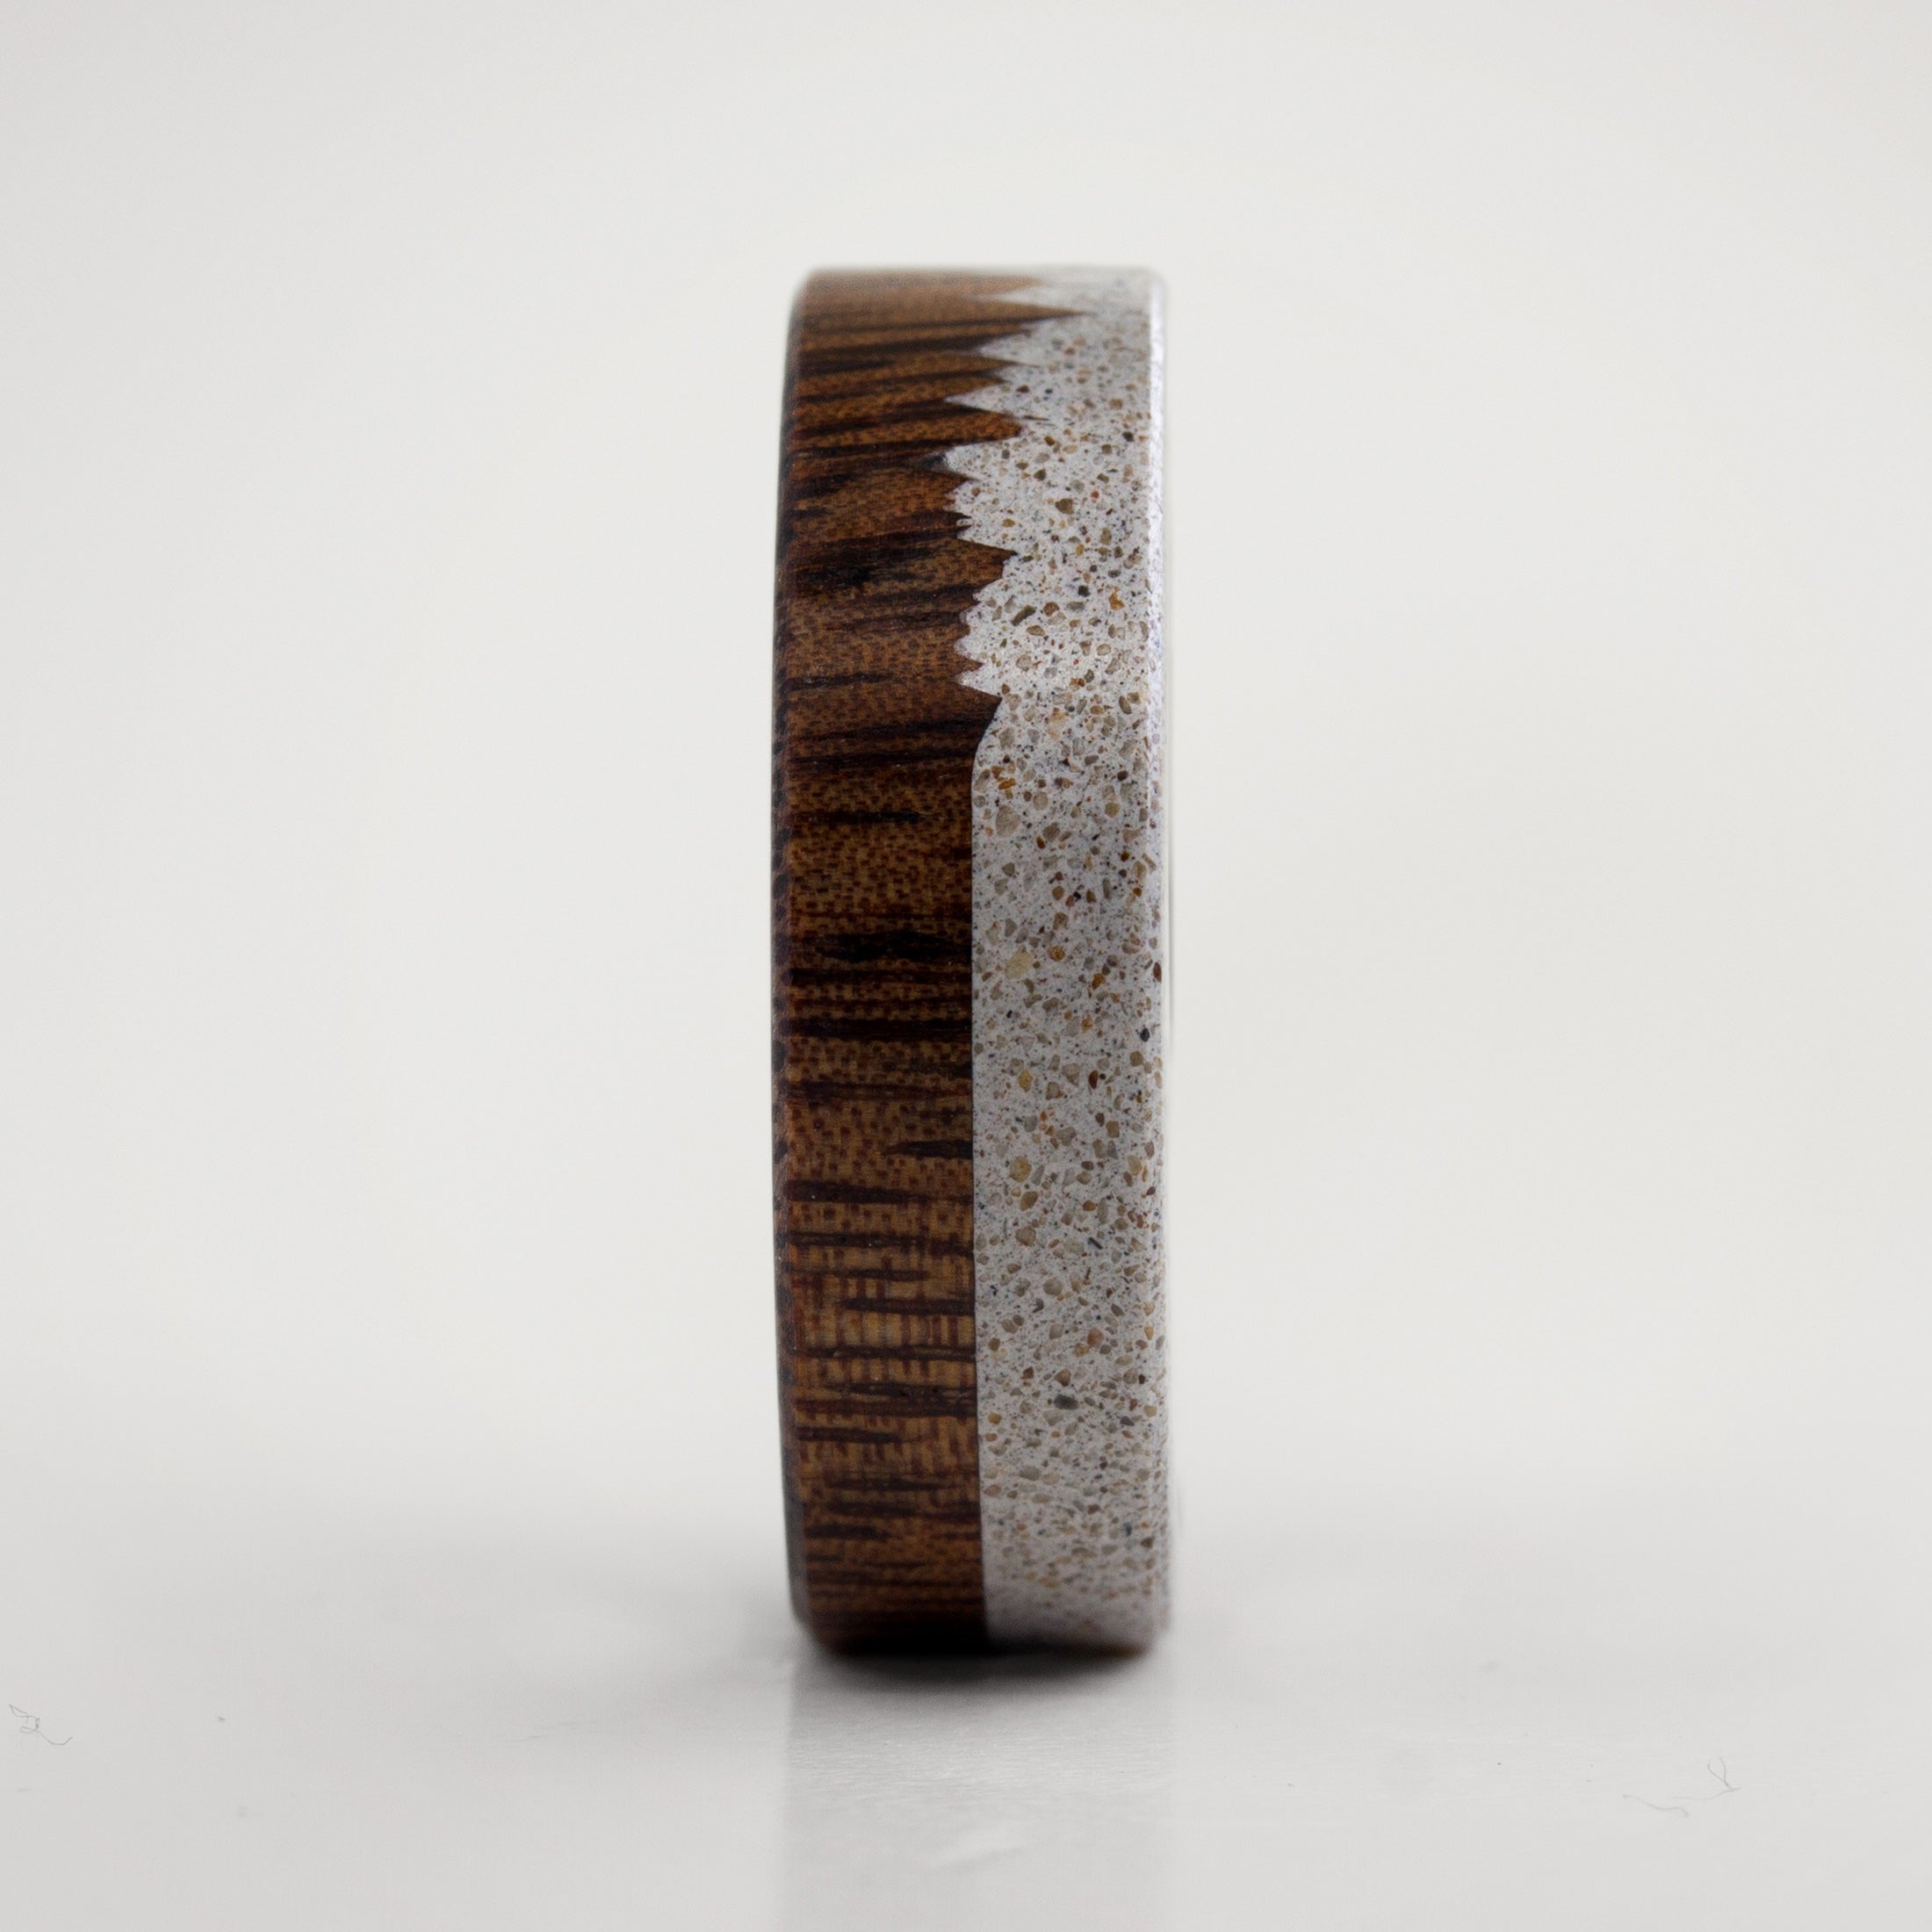 Gray Concrete Wood and titanium maniac ring